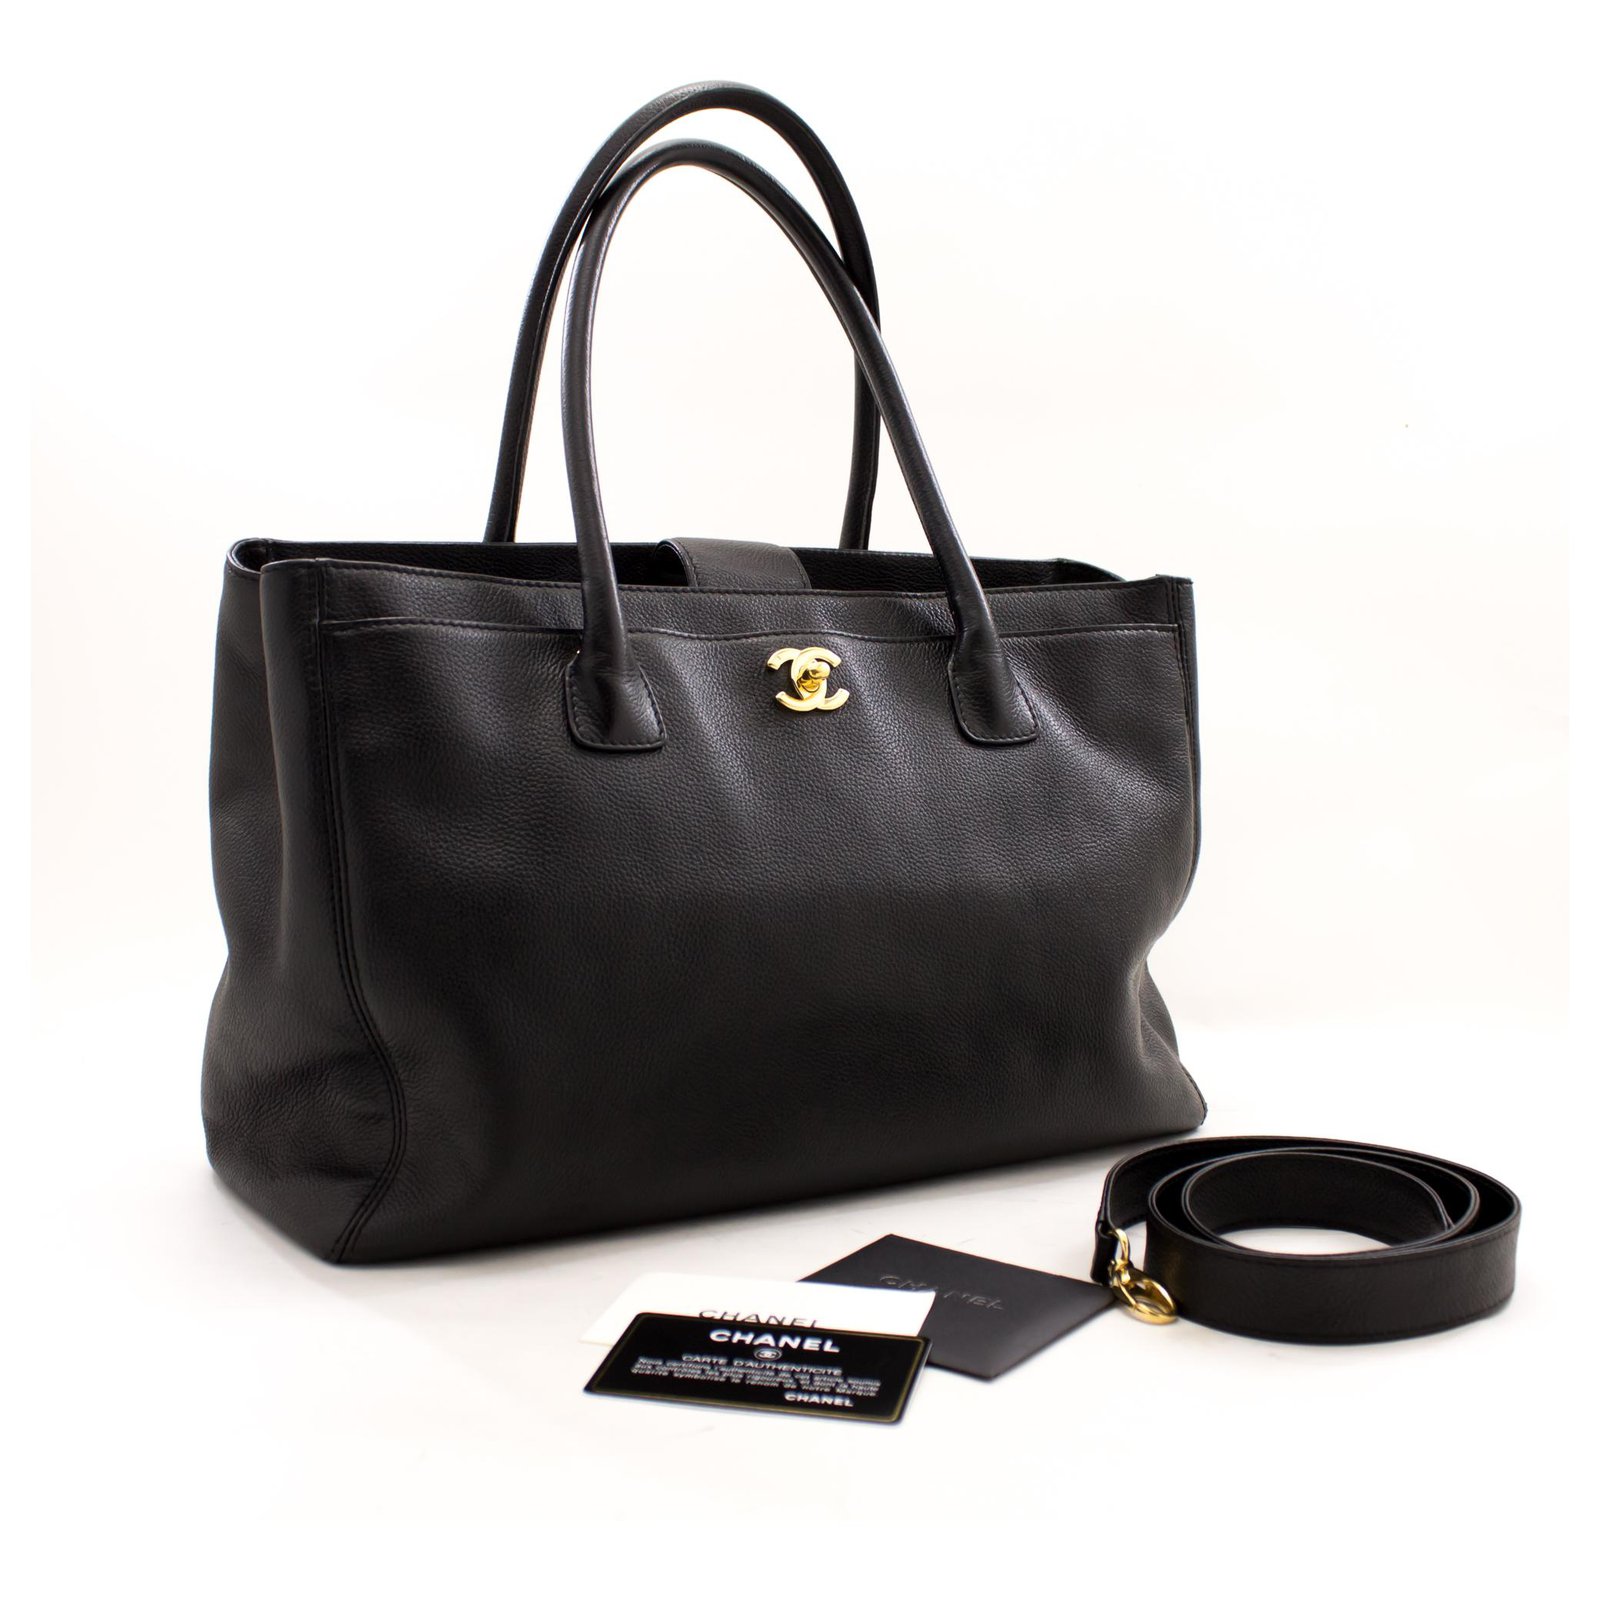 CHANEL Executive Tote Caviar Shoulder Bag Handbag Black Gold Strap